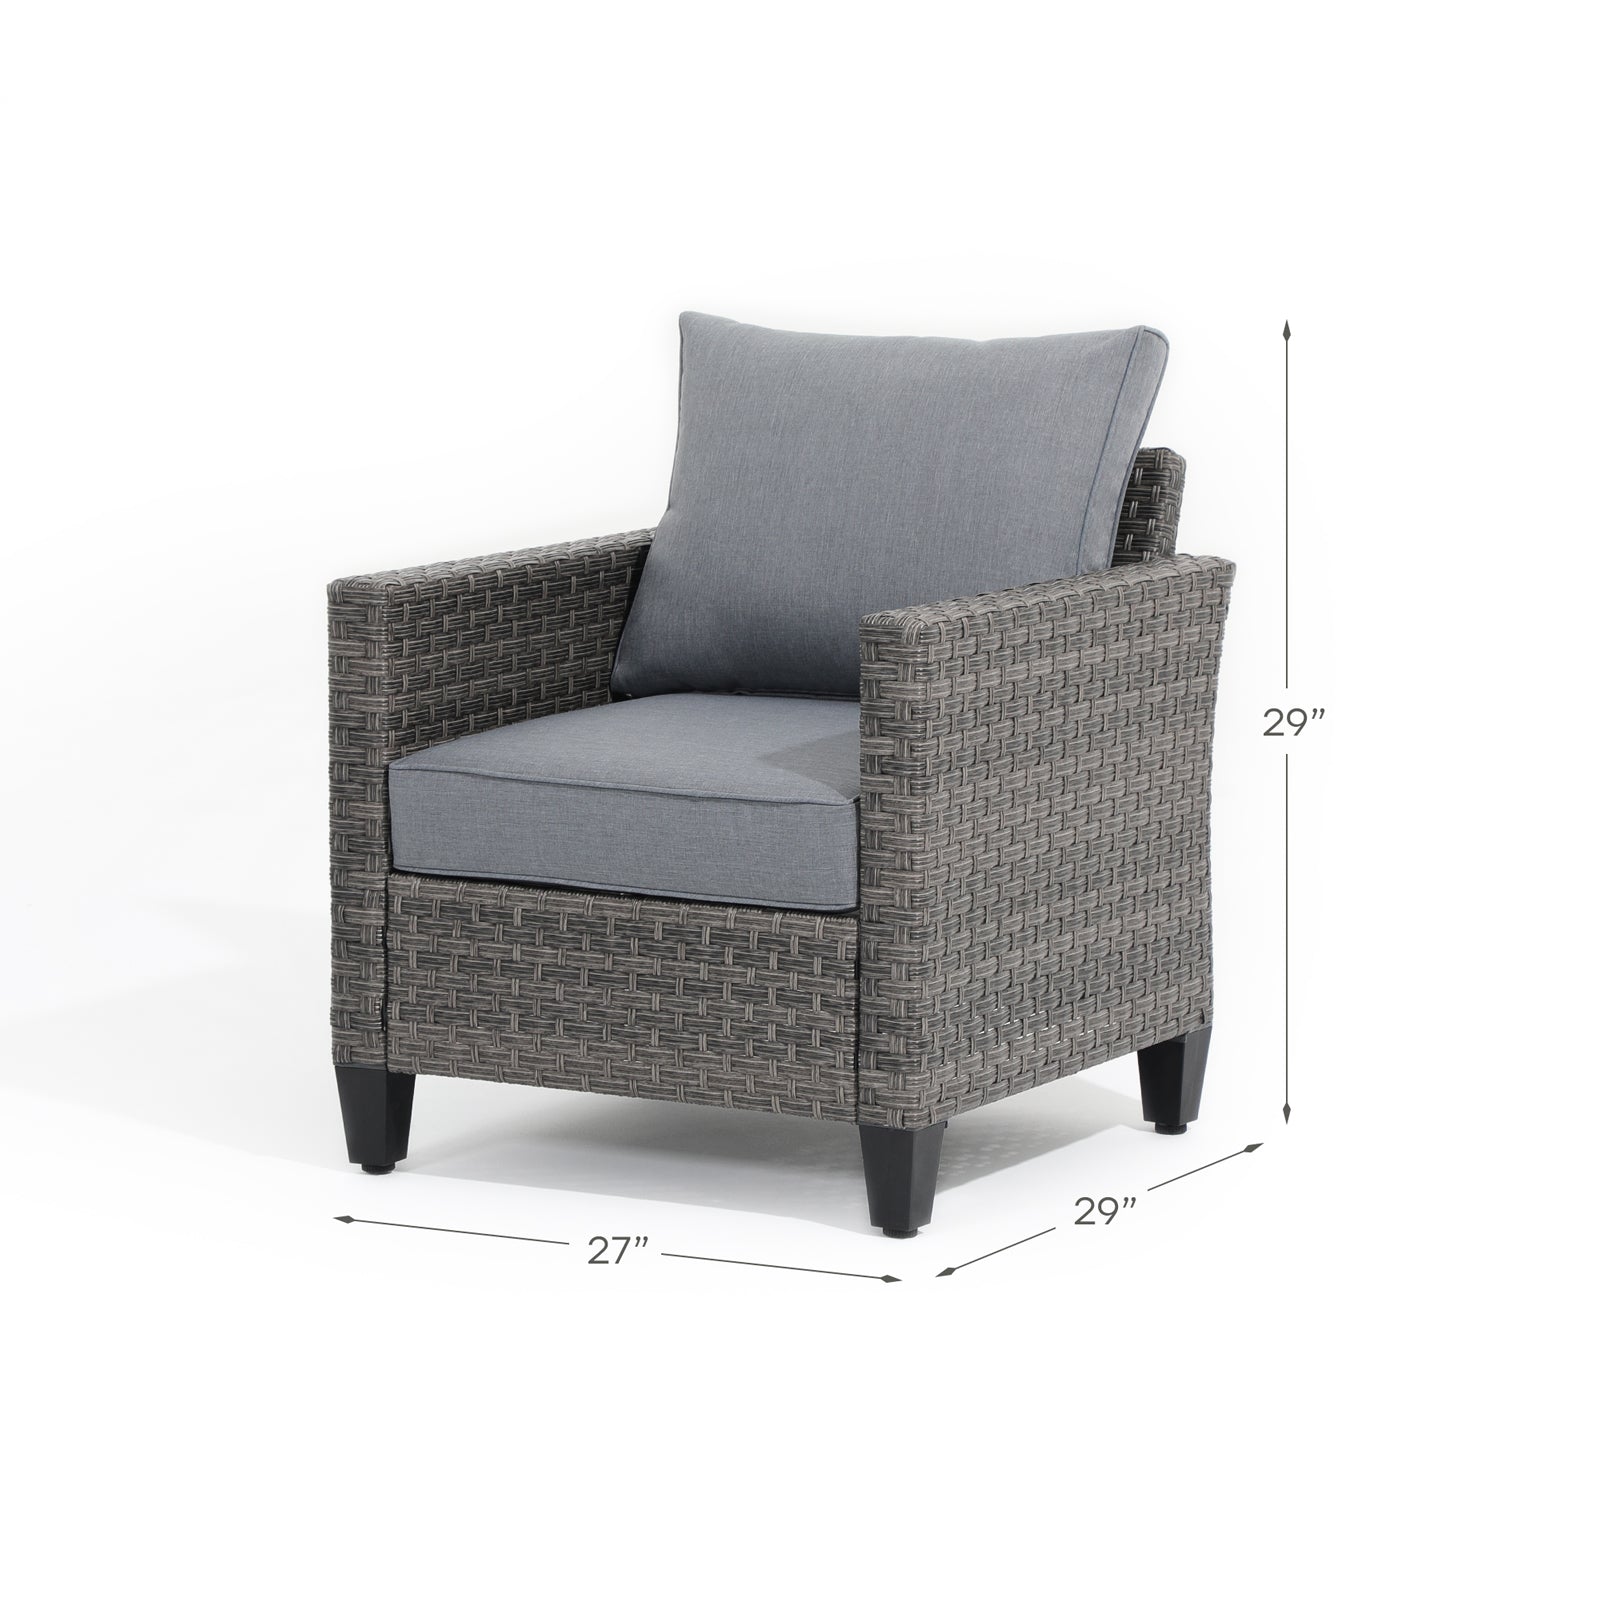 Ayia grey lounge chair with rattan design, grey cushions, dimension information  - Jardina Furniture #color_Grey